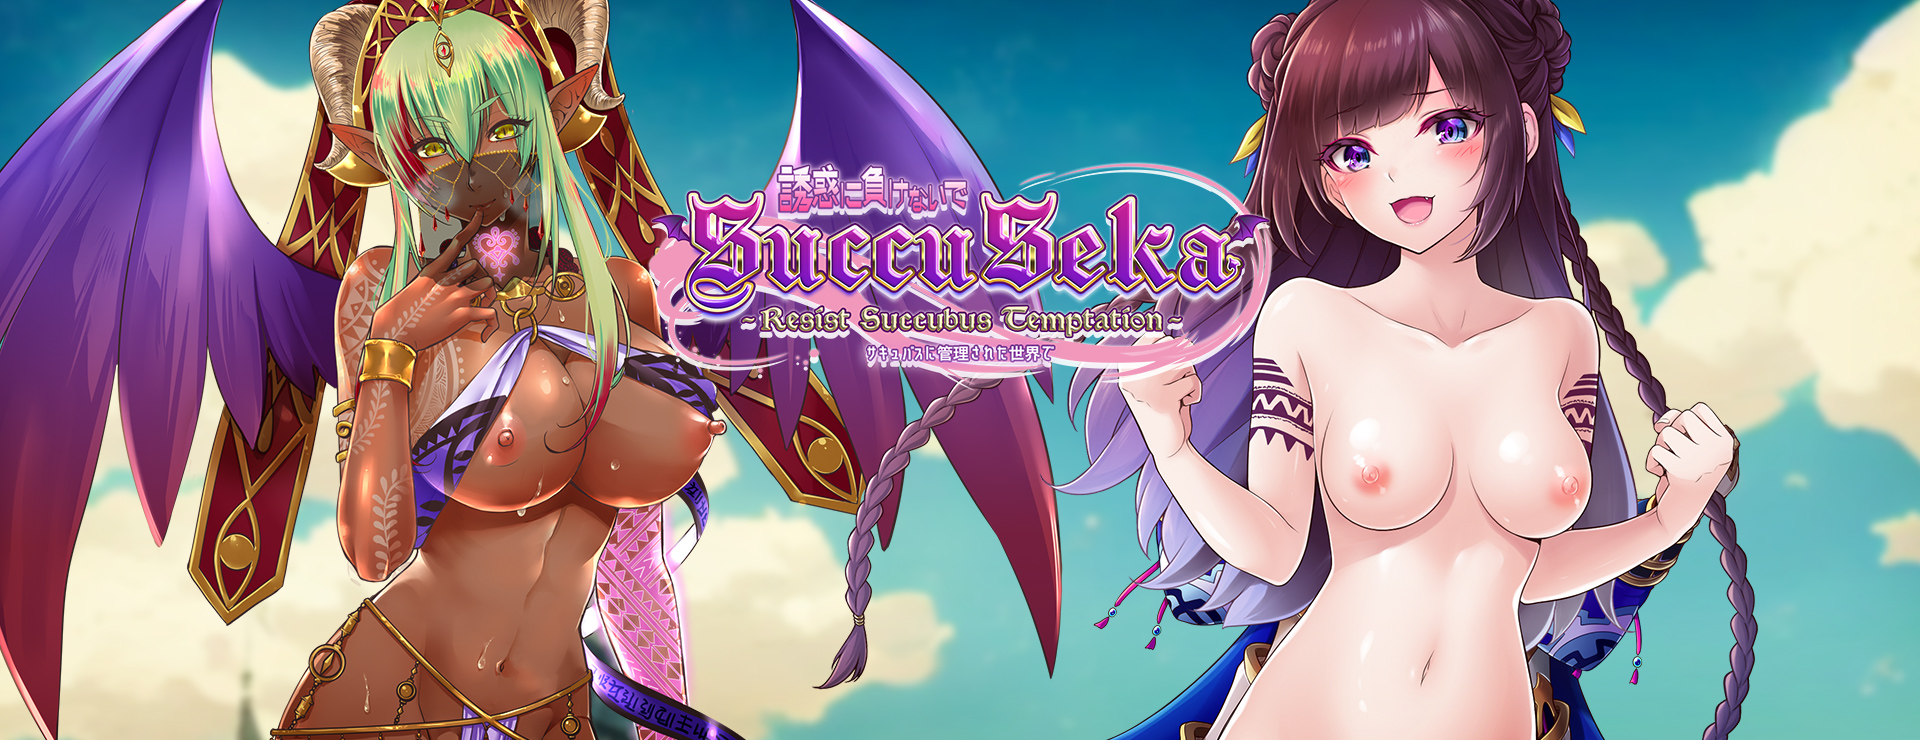 SuccuSeka: Resist Succubus Temptation Global Version - ビジュアルノベル ゲーム